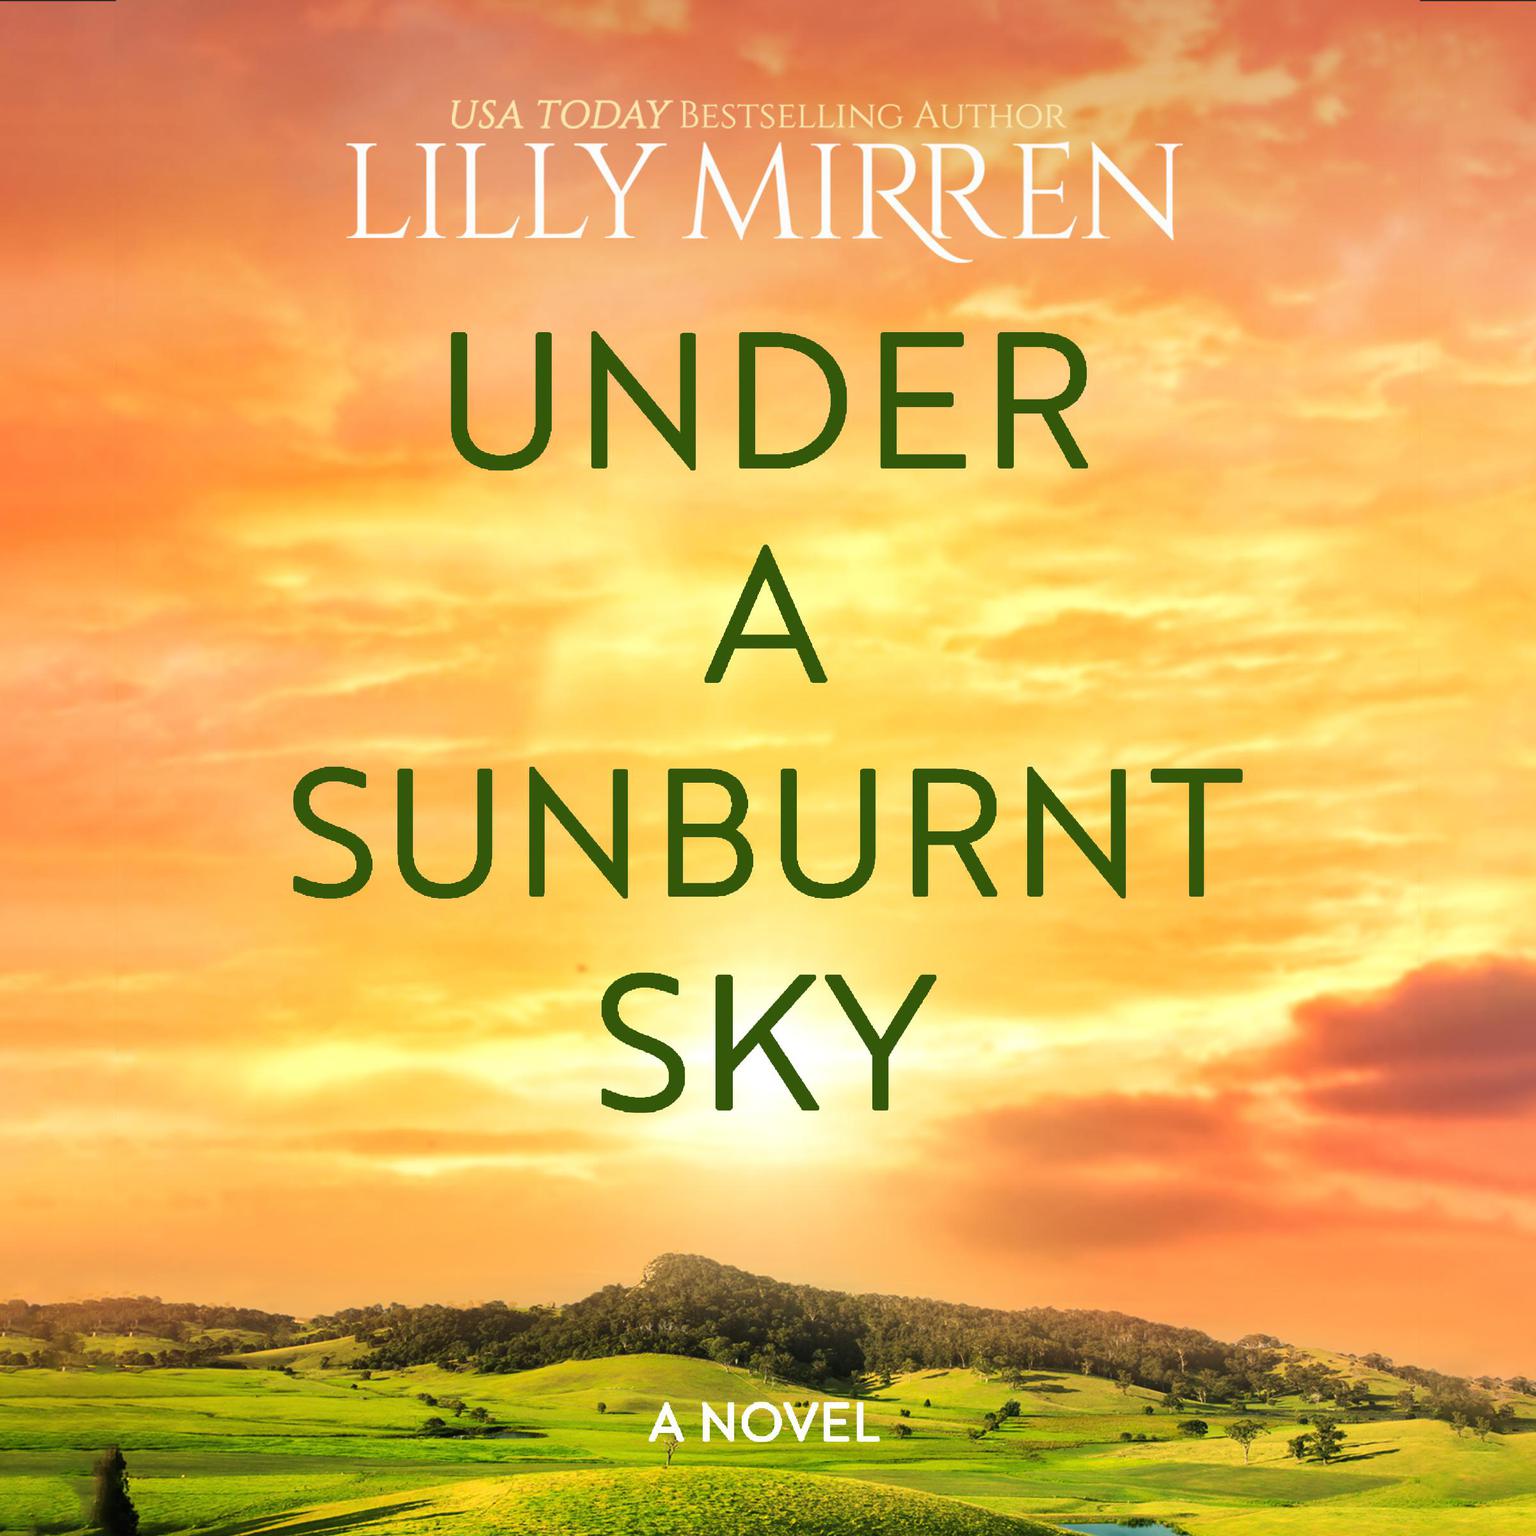 Under a Sunburnt Sky Audiobook, by Lilly Mirren